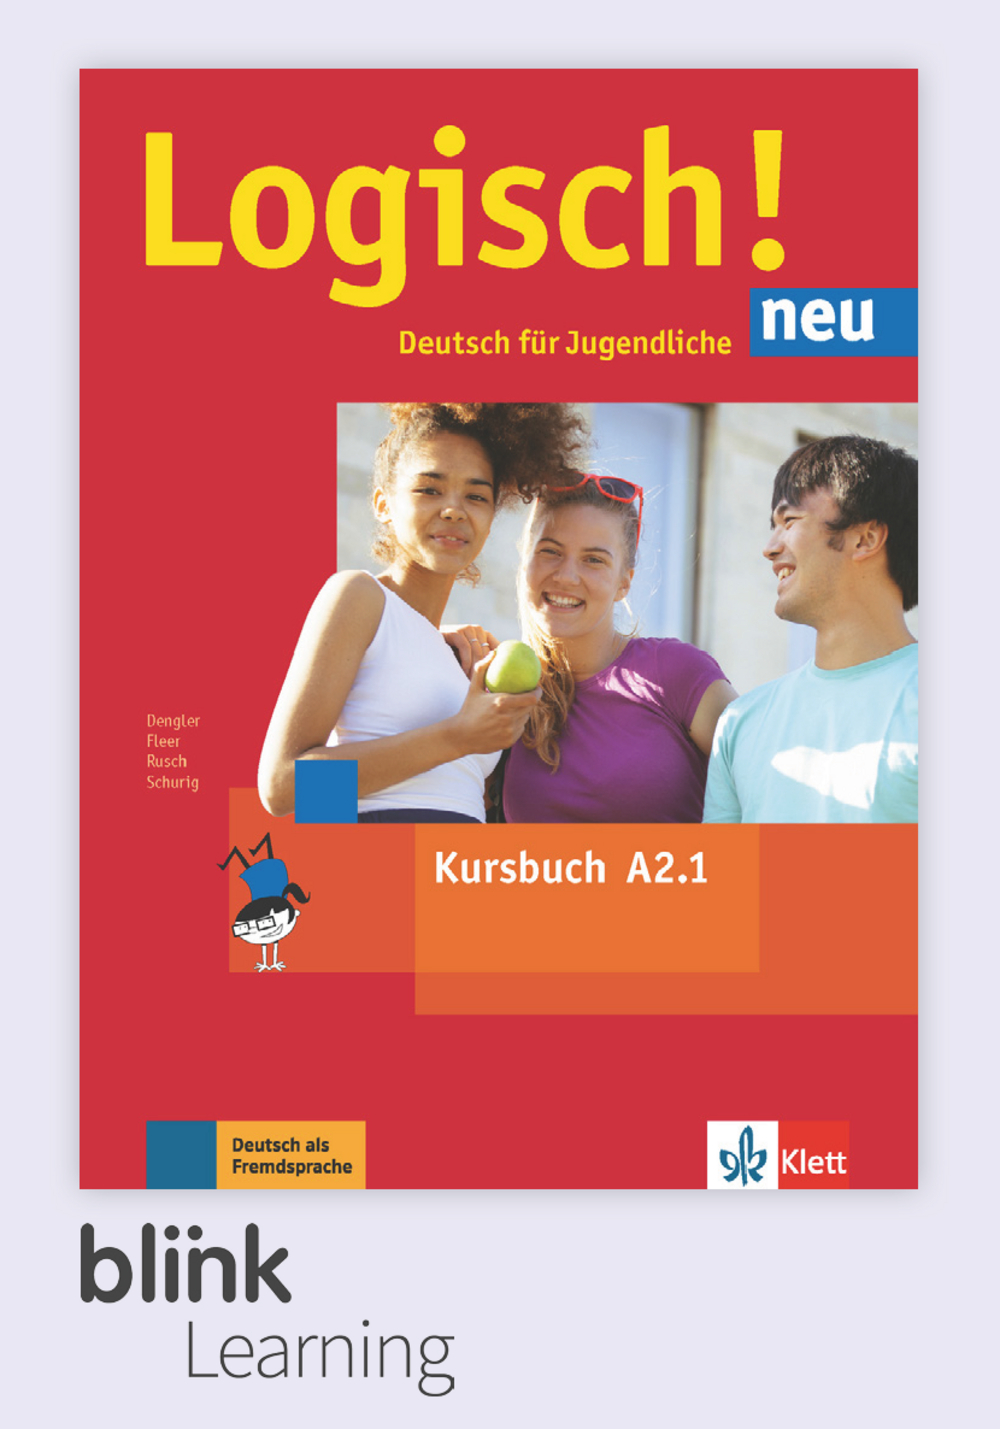 Logisch! NEU A2.1 Digital Kursbuch für Lernende / Цифровой учебник для ученика